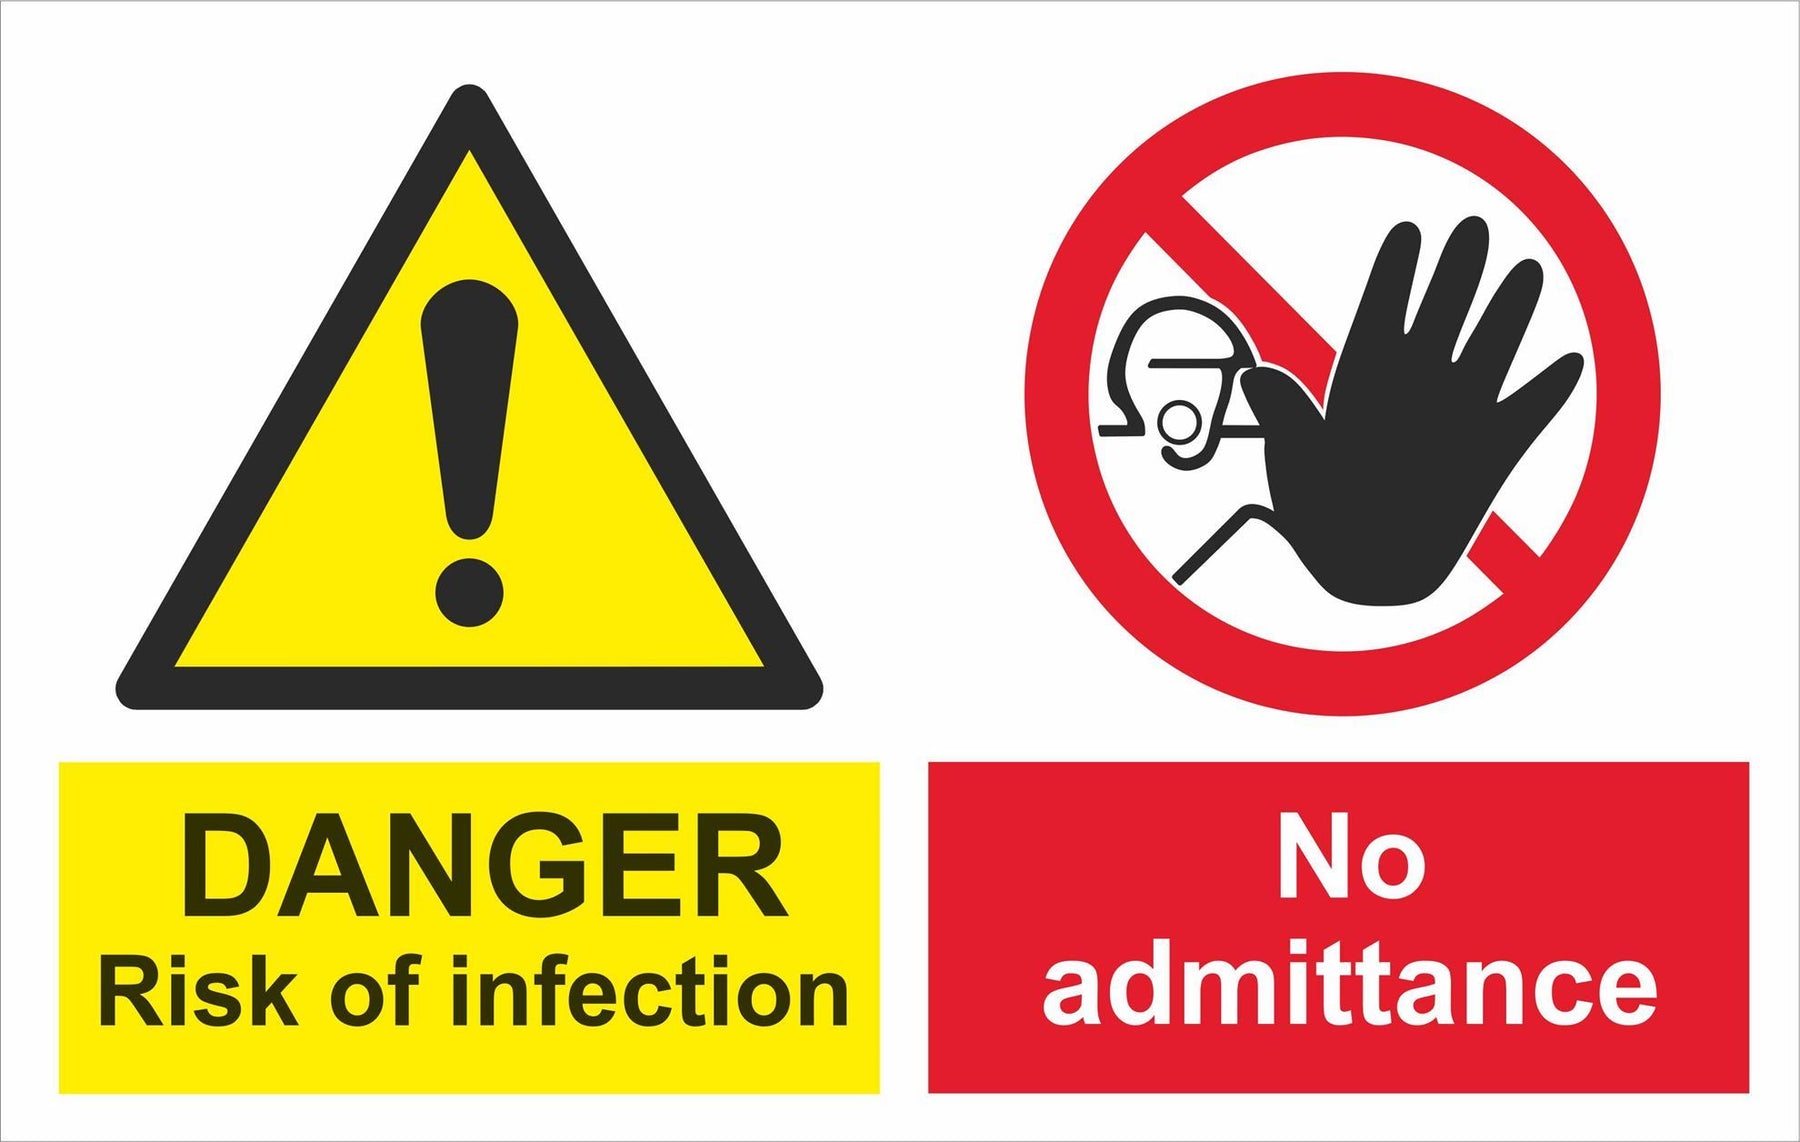 DANGER Risk of infection